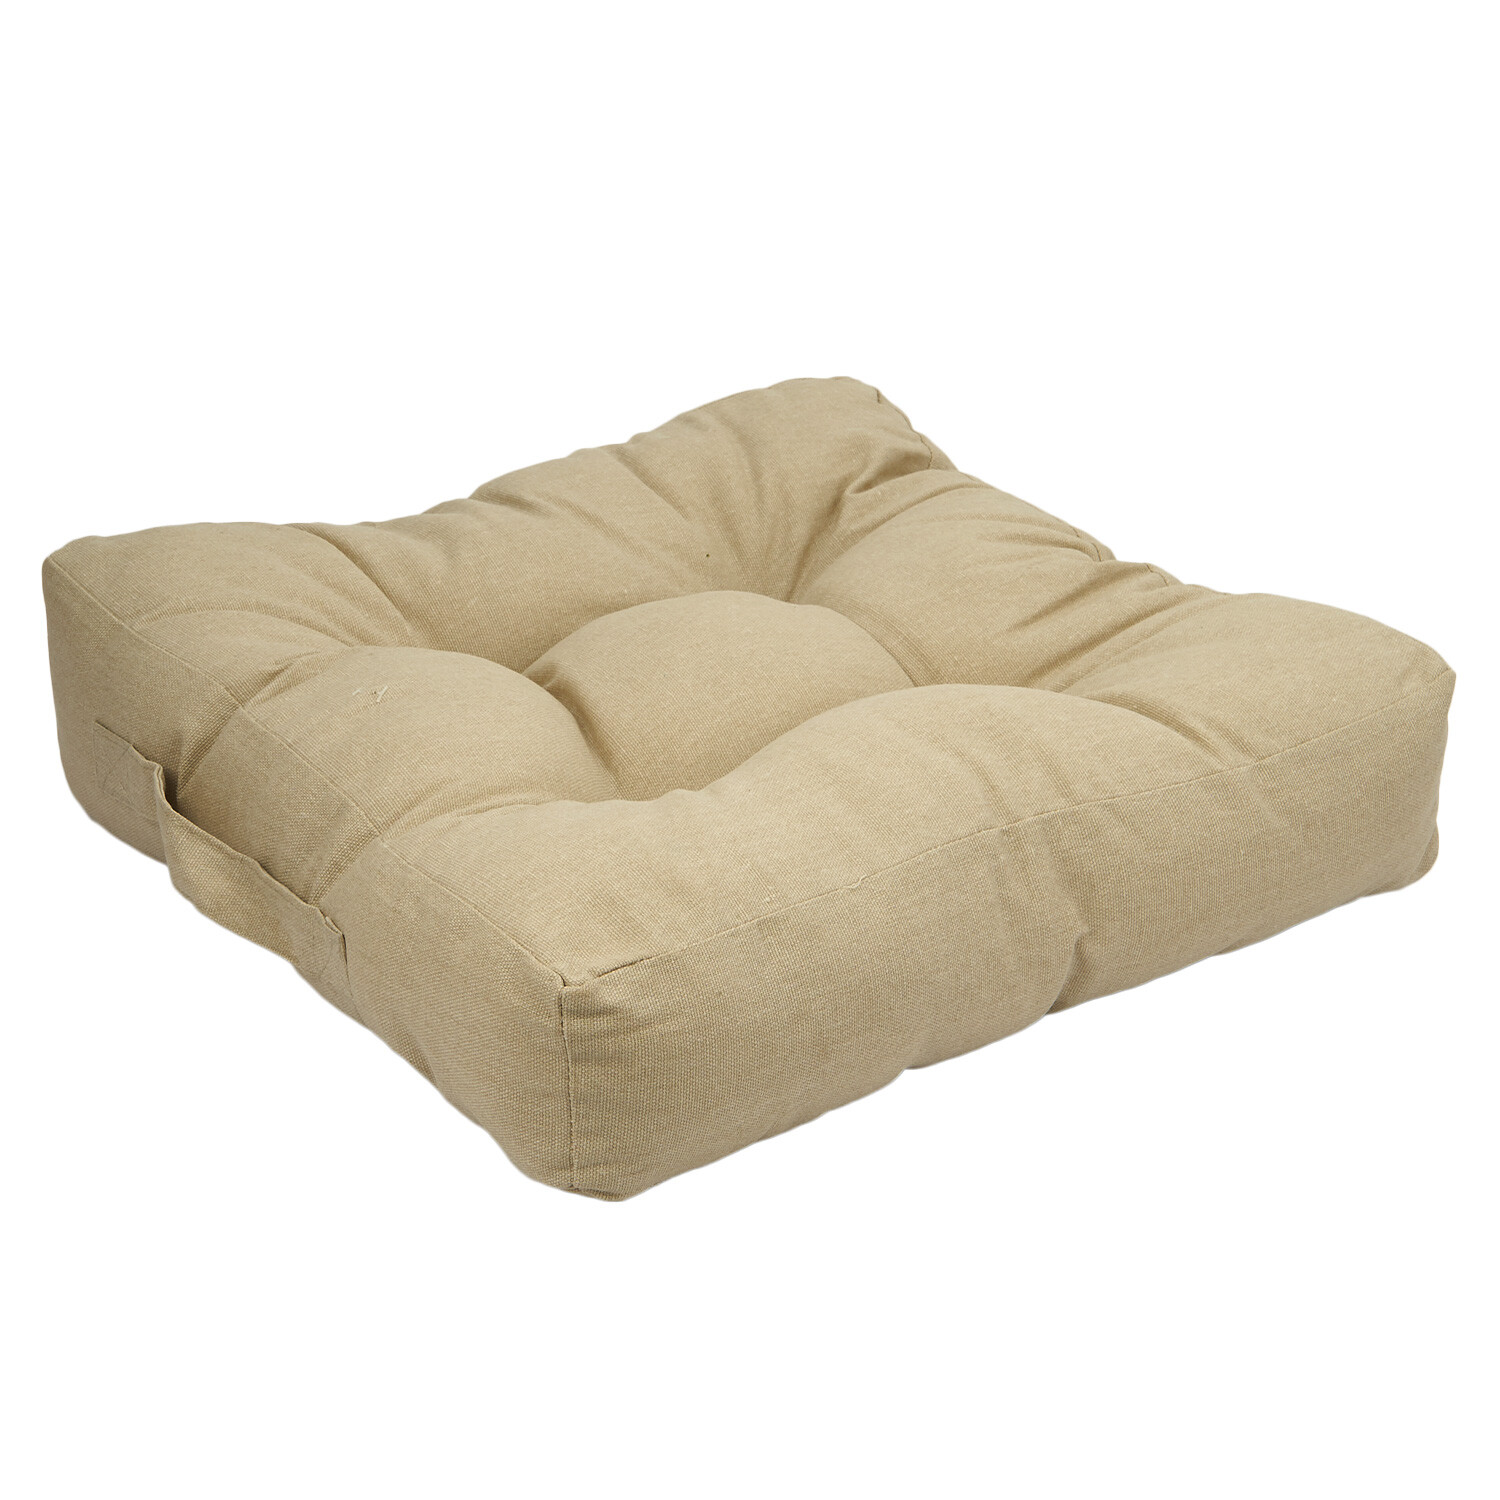 Premium Booster Cushion - Beige Image 1